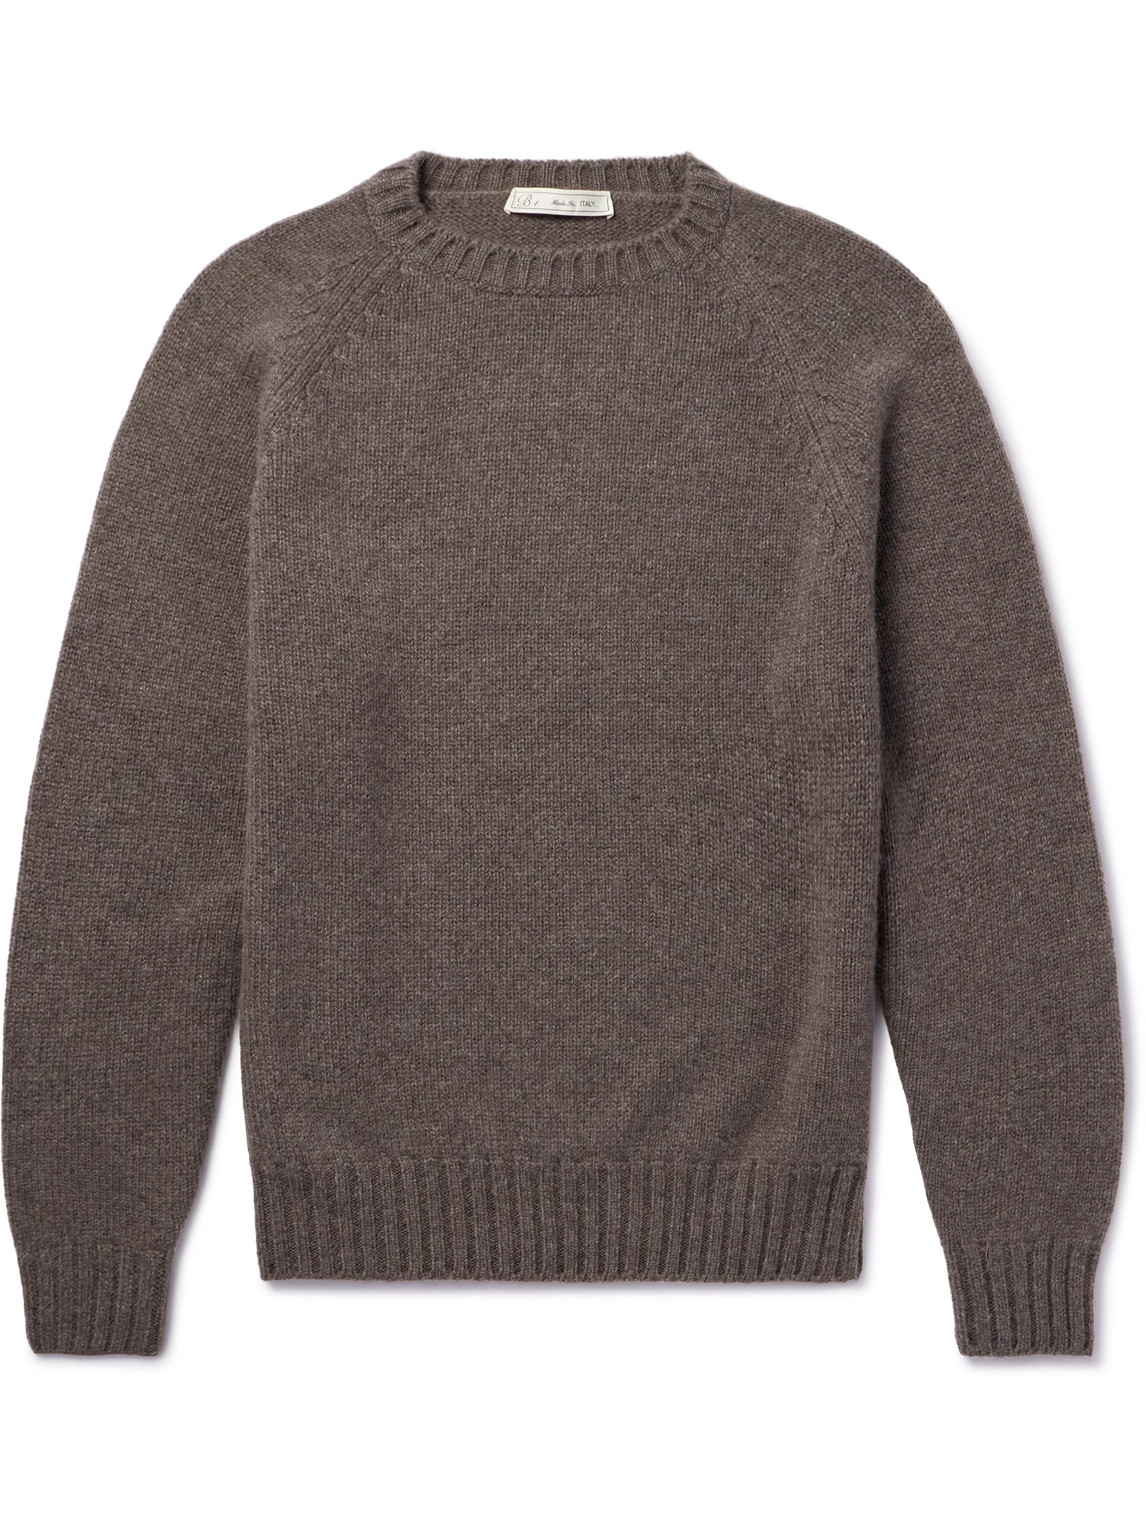 Umit Benan B+ Cashmere Sweater In Brown